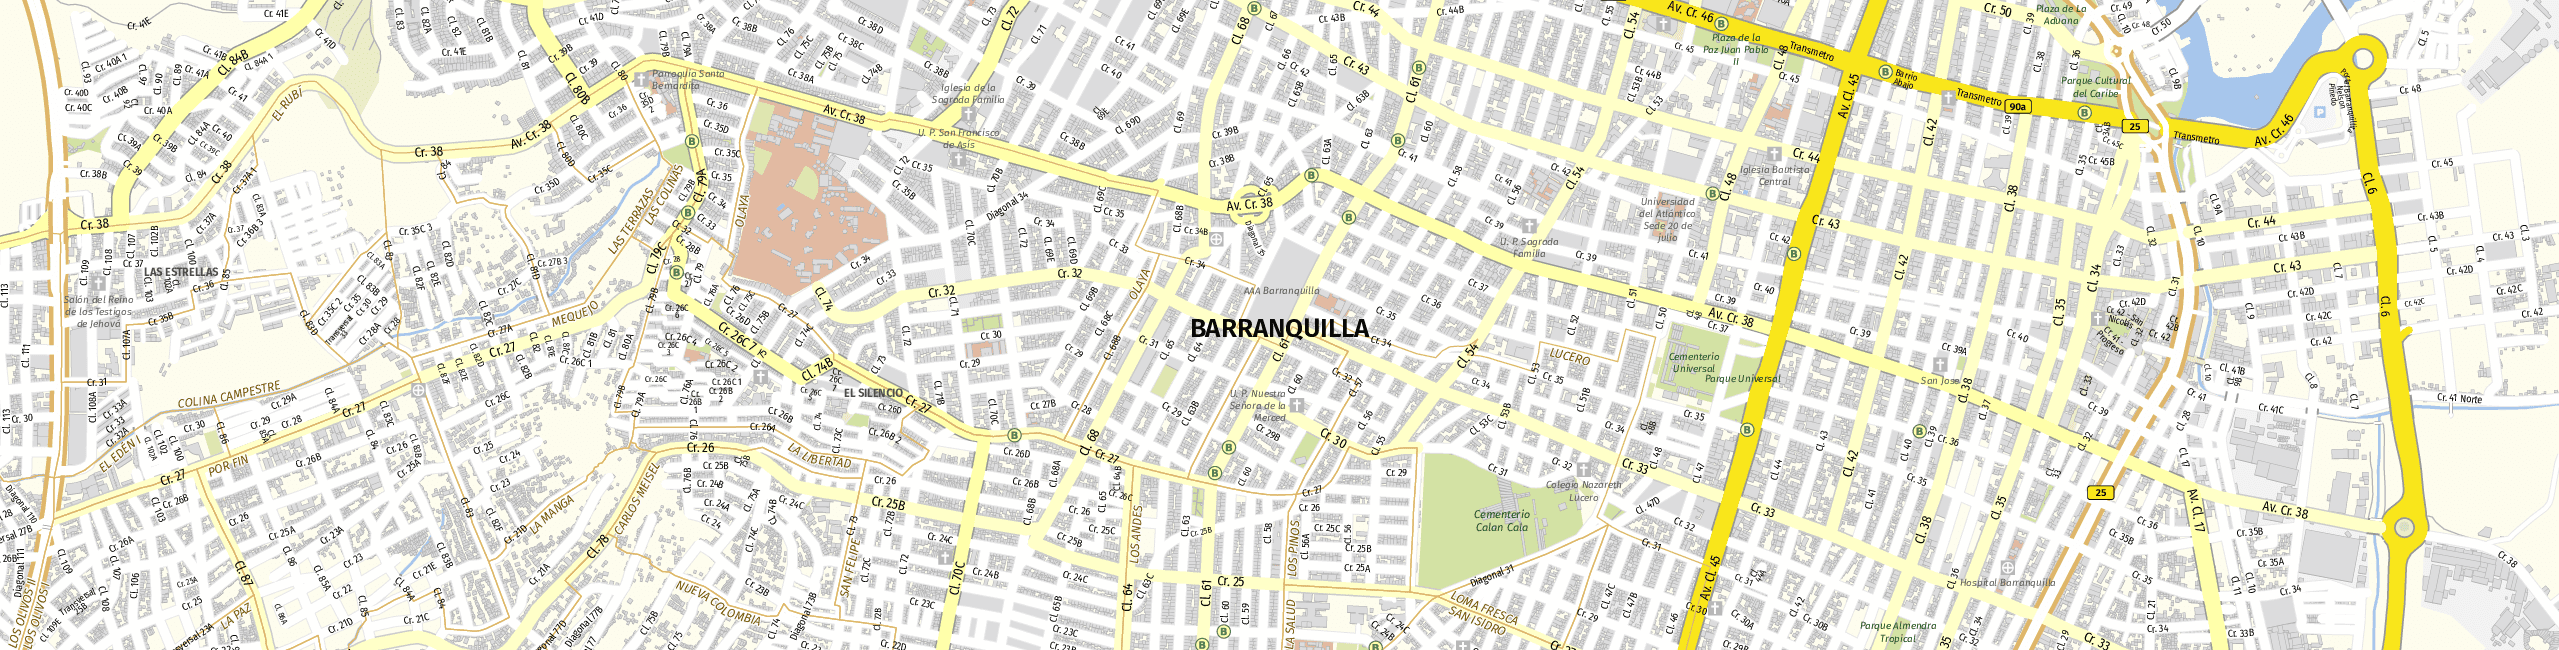 Stadtplan Barranquilla zum Downloaden.